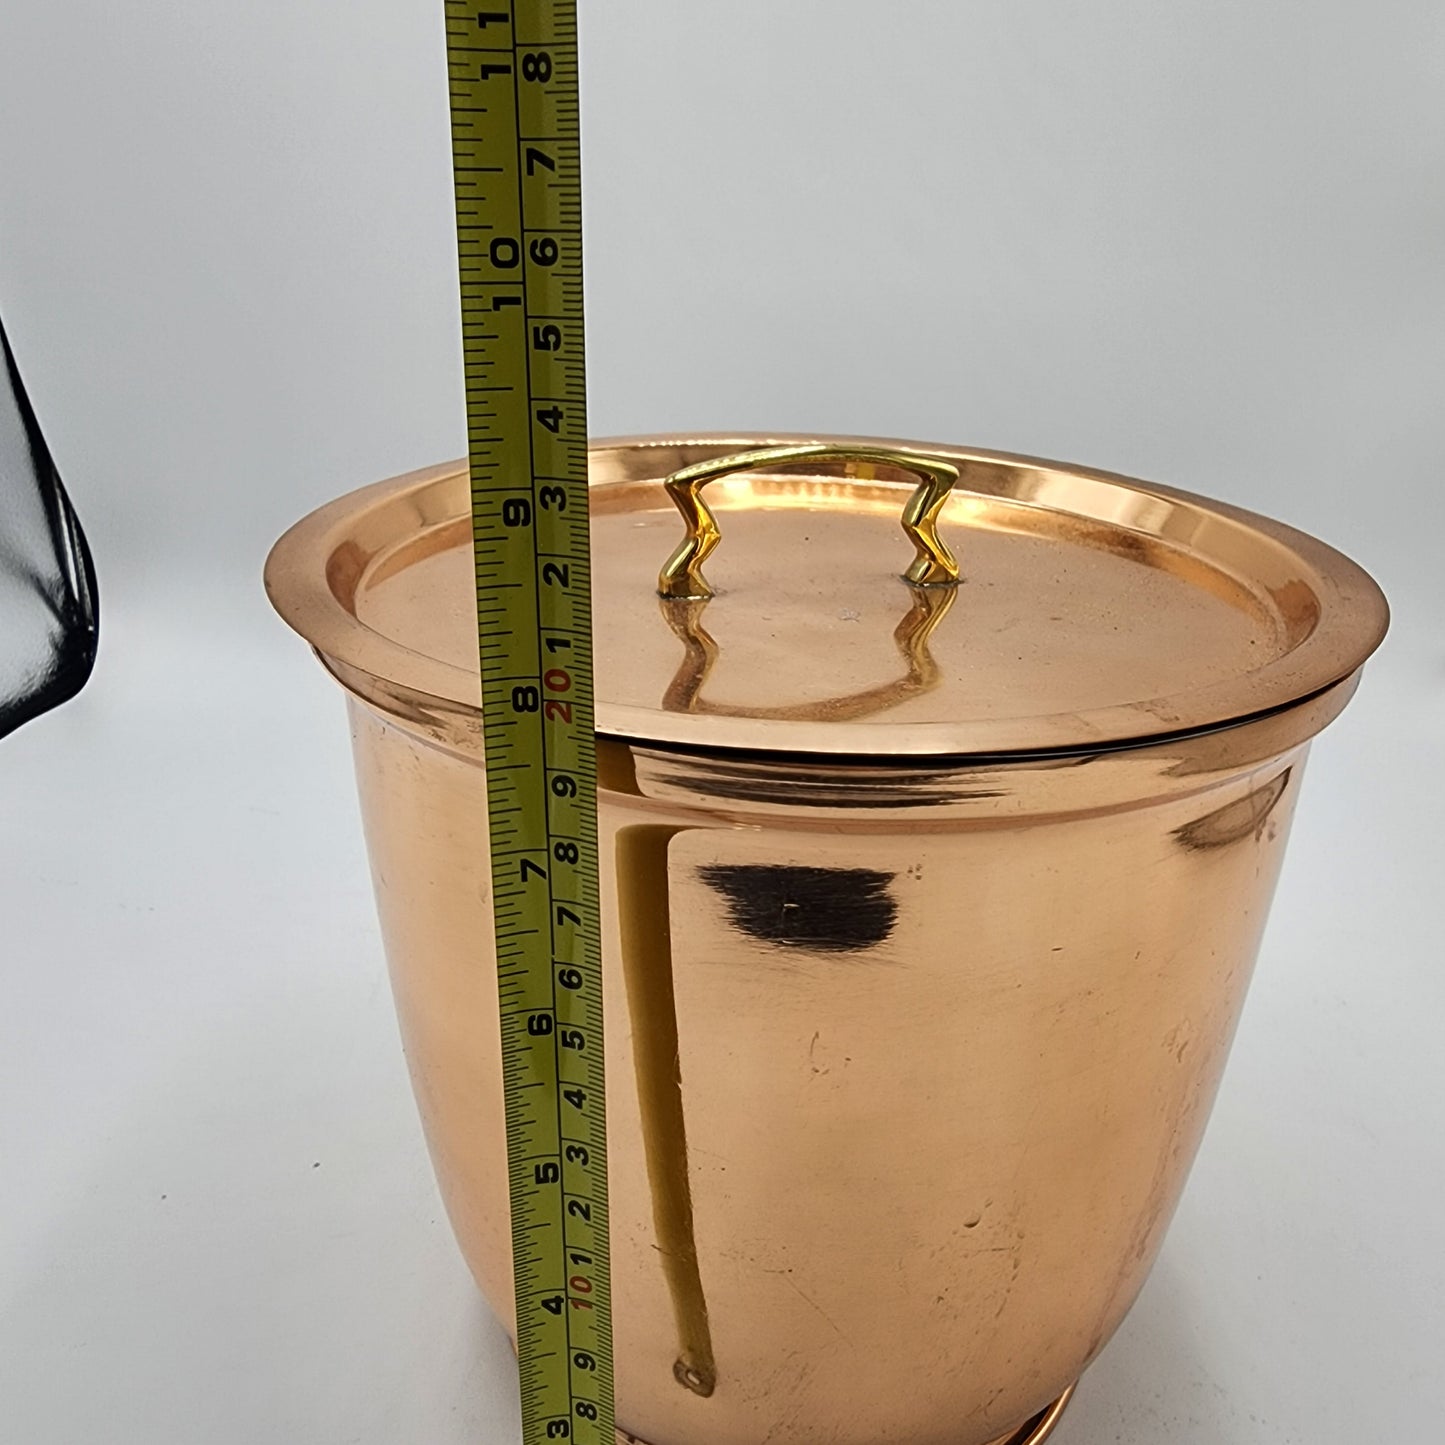 Pottery Barn Copper Ice Bucket